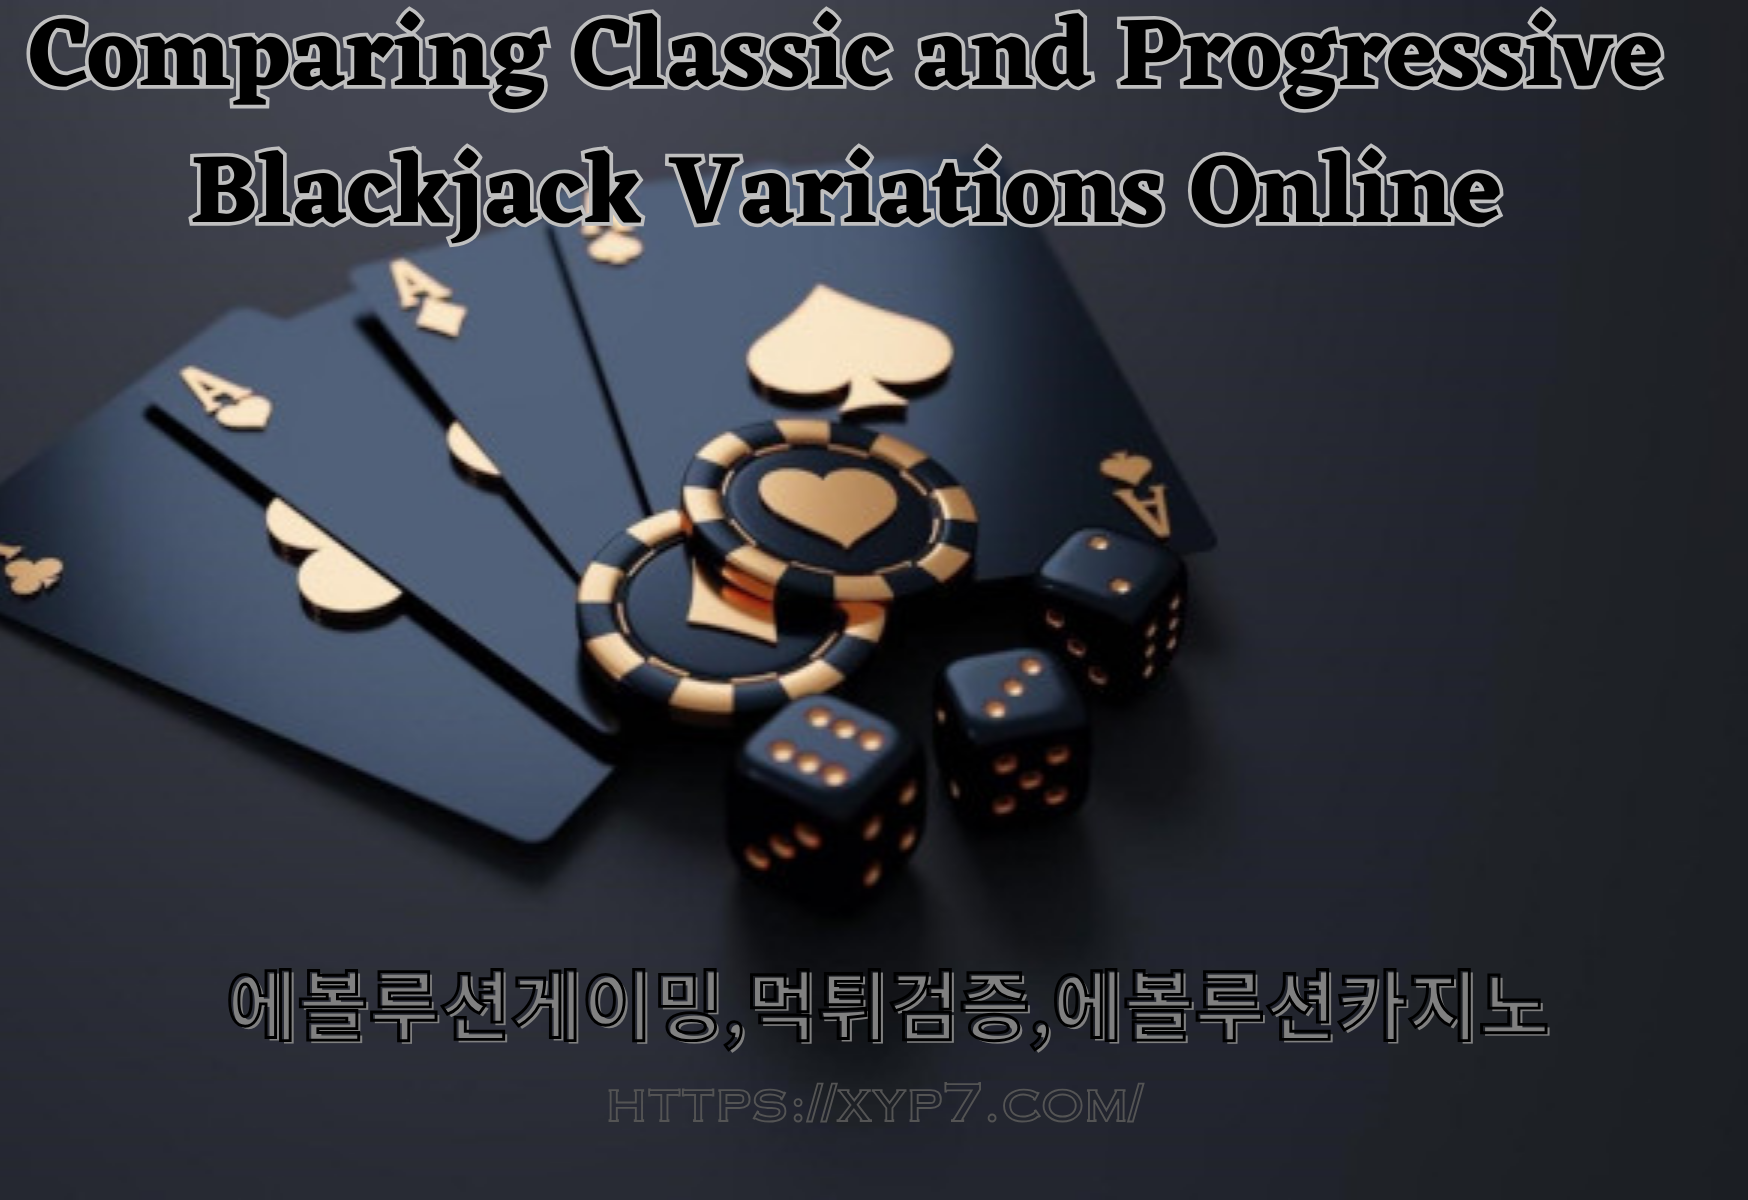 Comparing Classic and Progressive Blackjack Variations Online